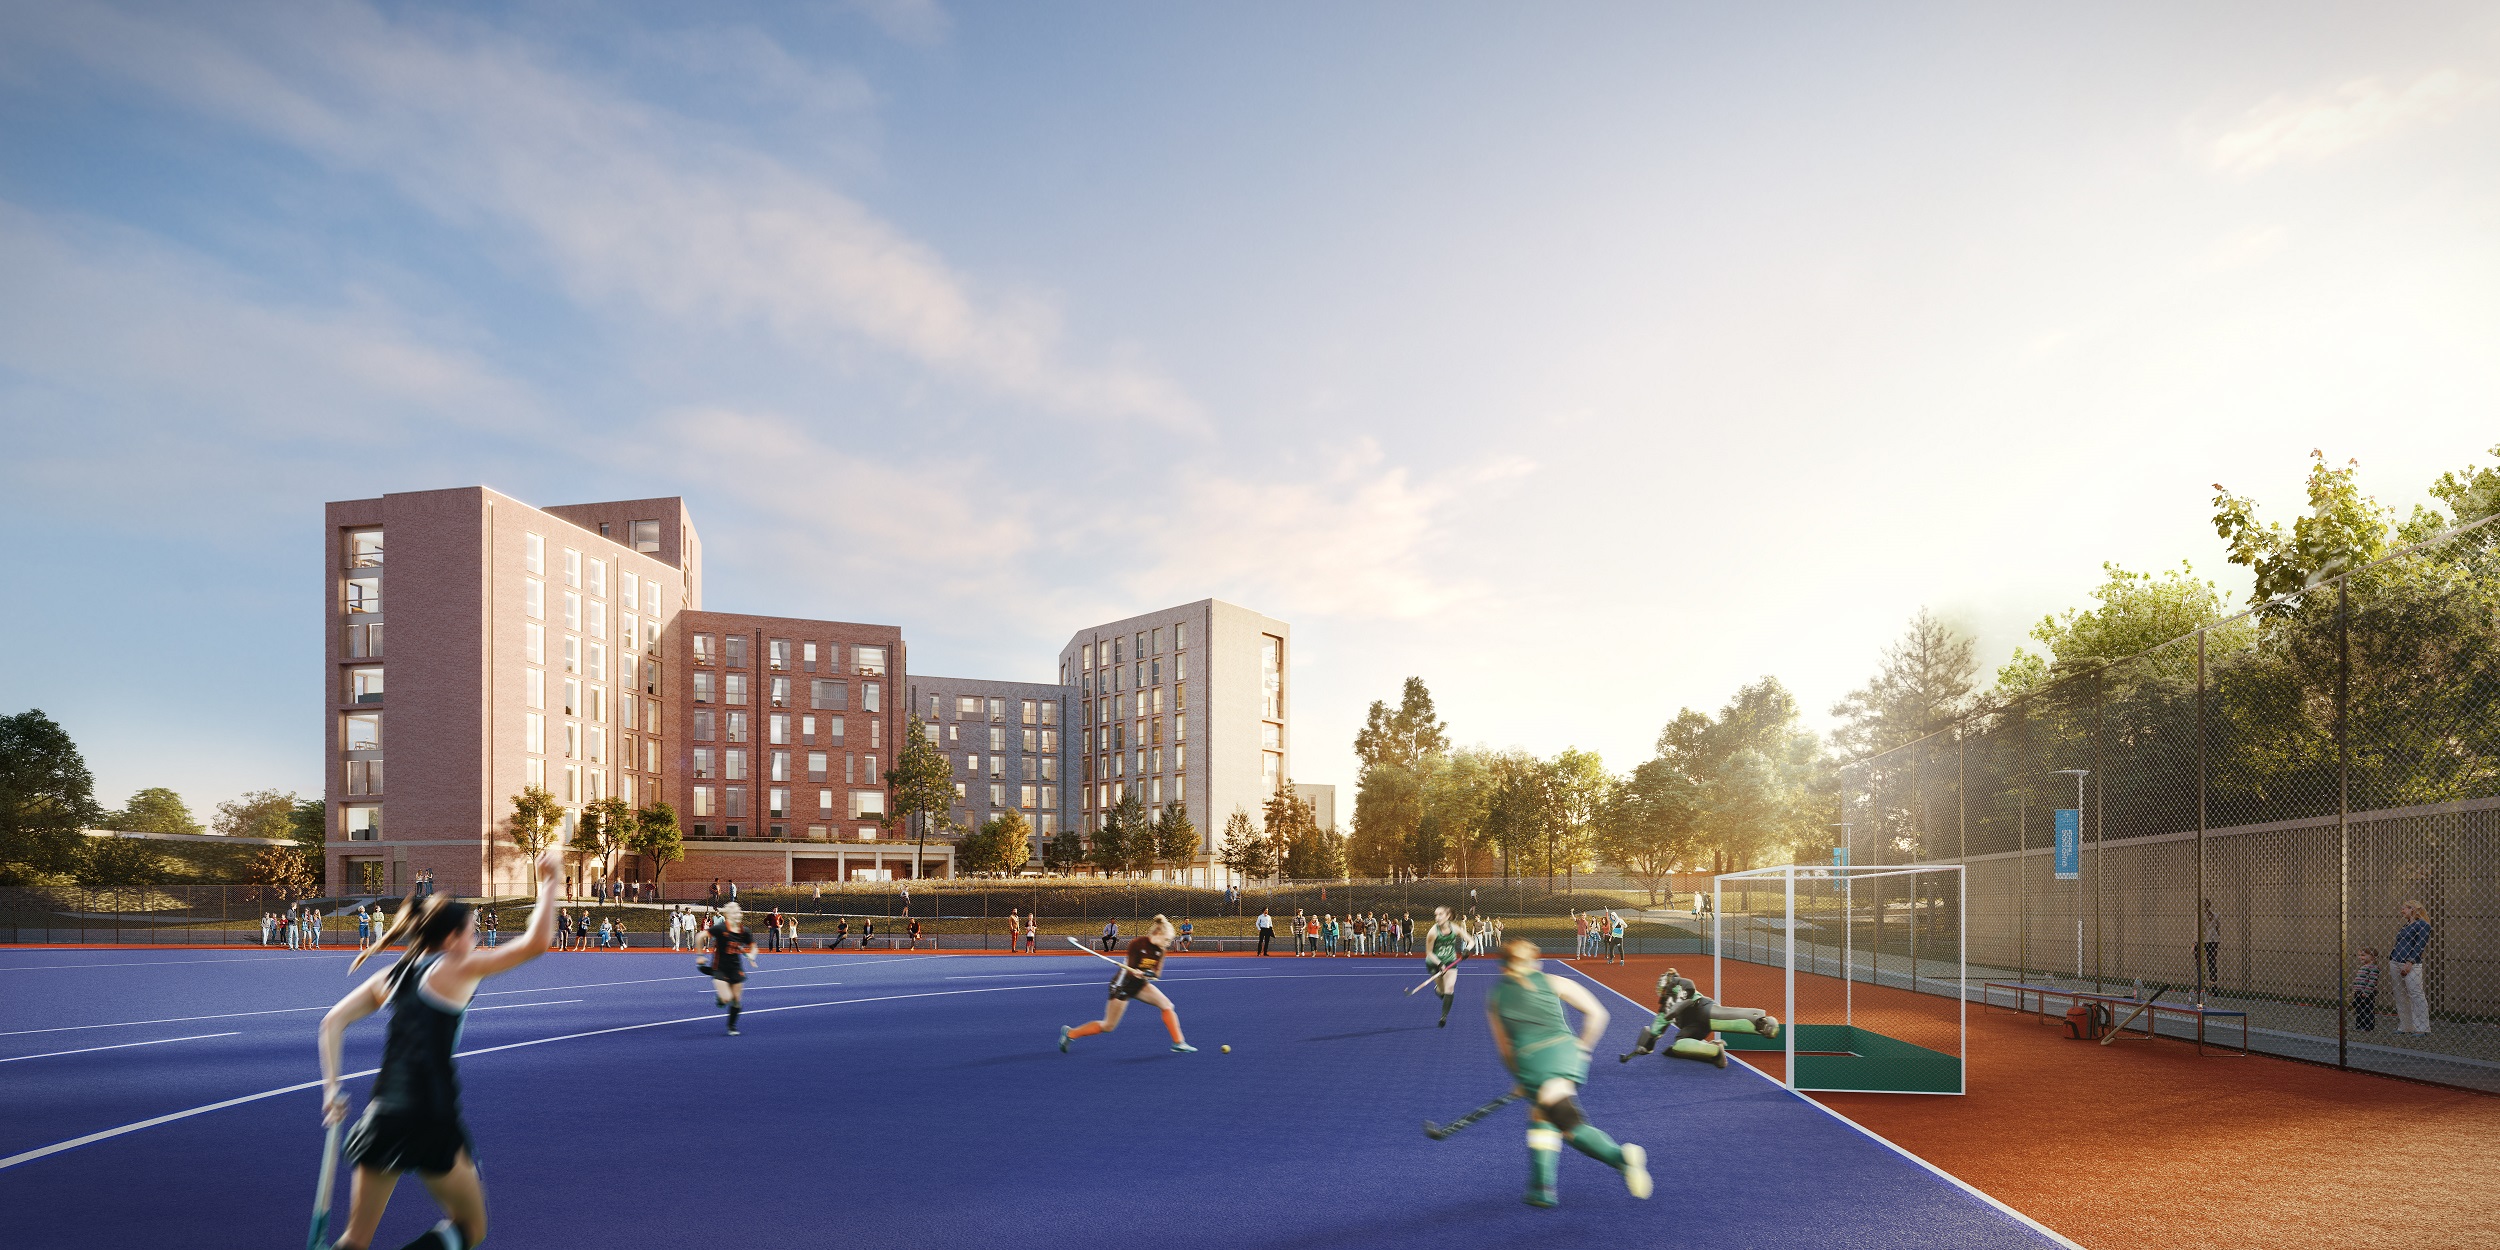 Images reveal University of Edinburgh’s plans for world-class sports village